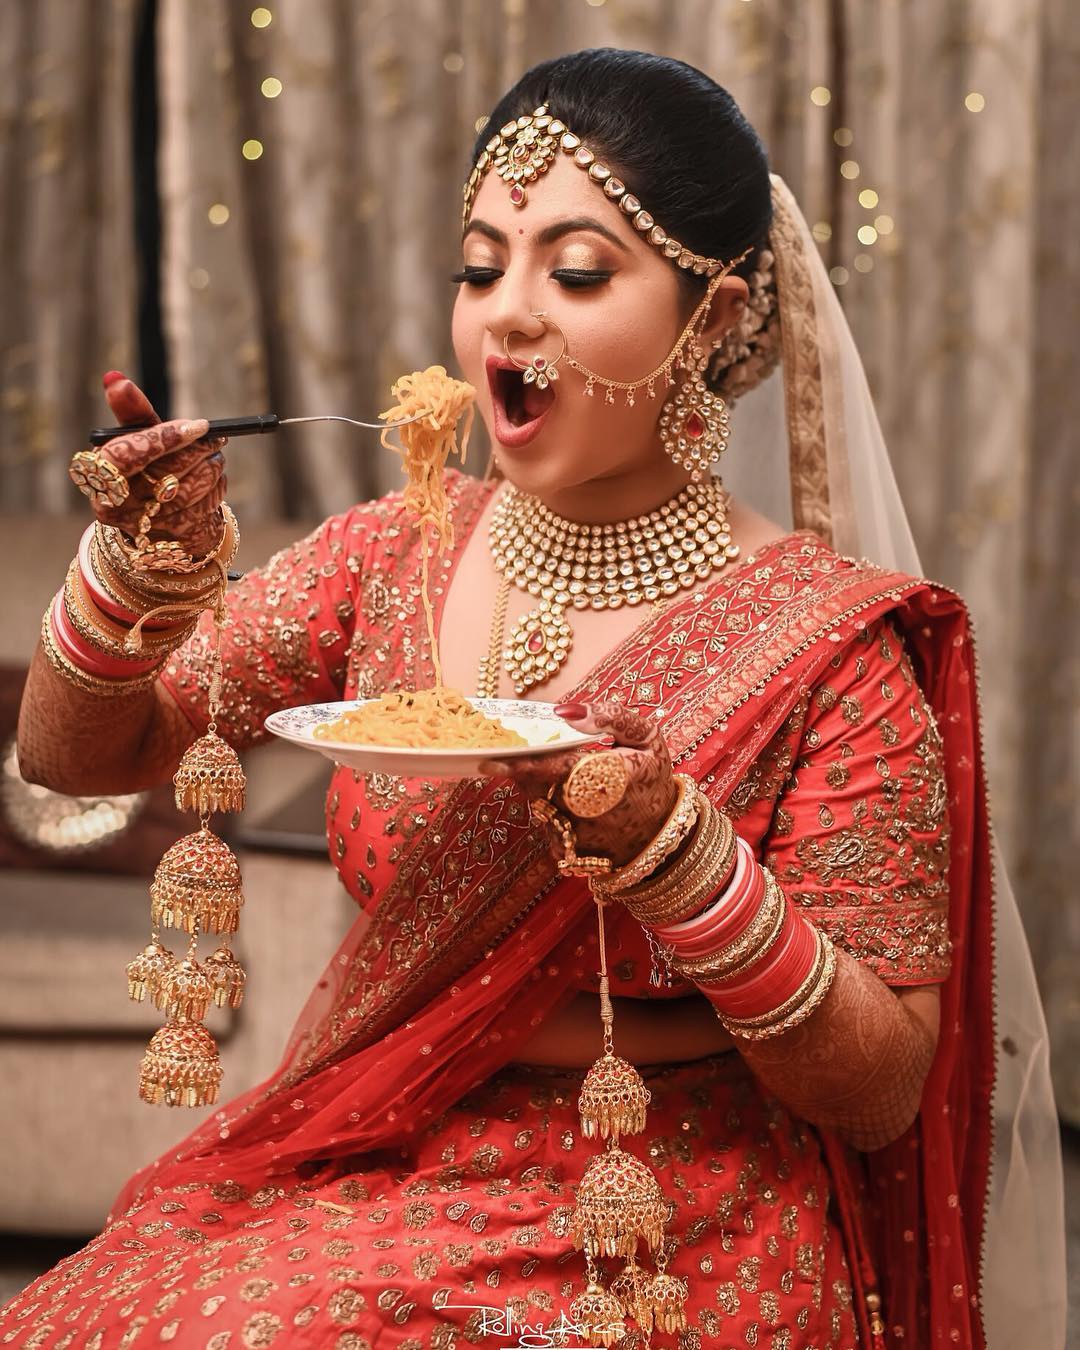 solo bridal photoshoot poses with food bridal photoshoot ideas